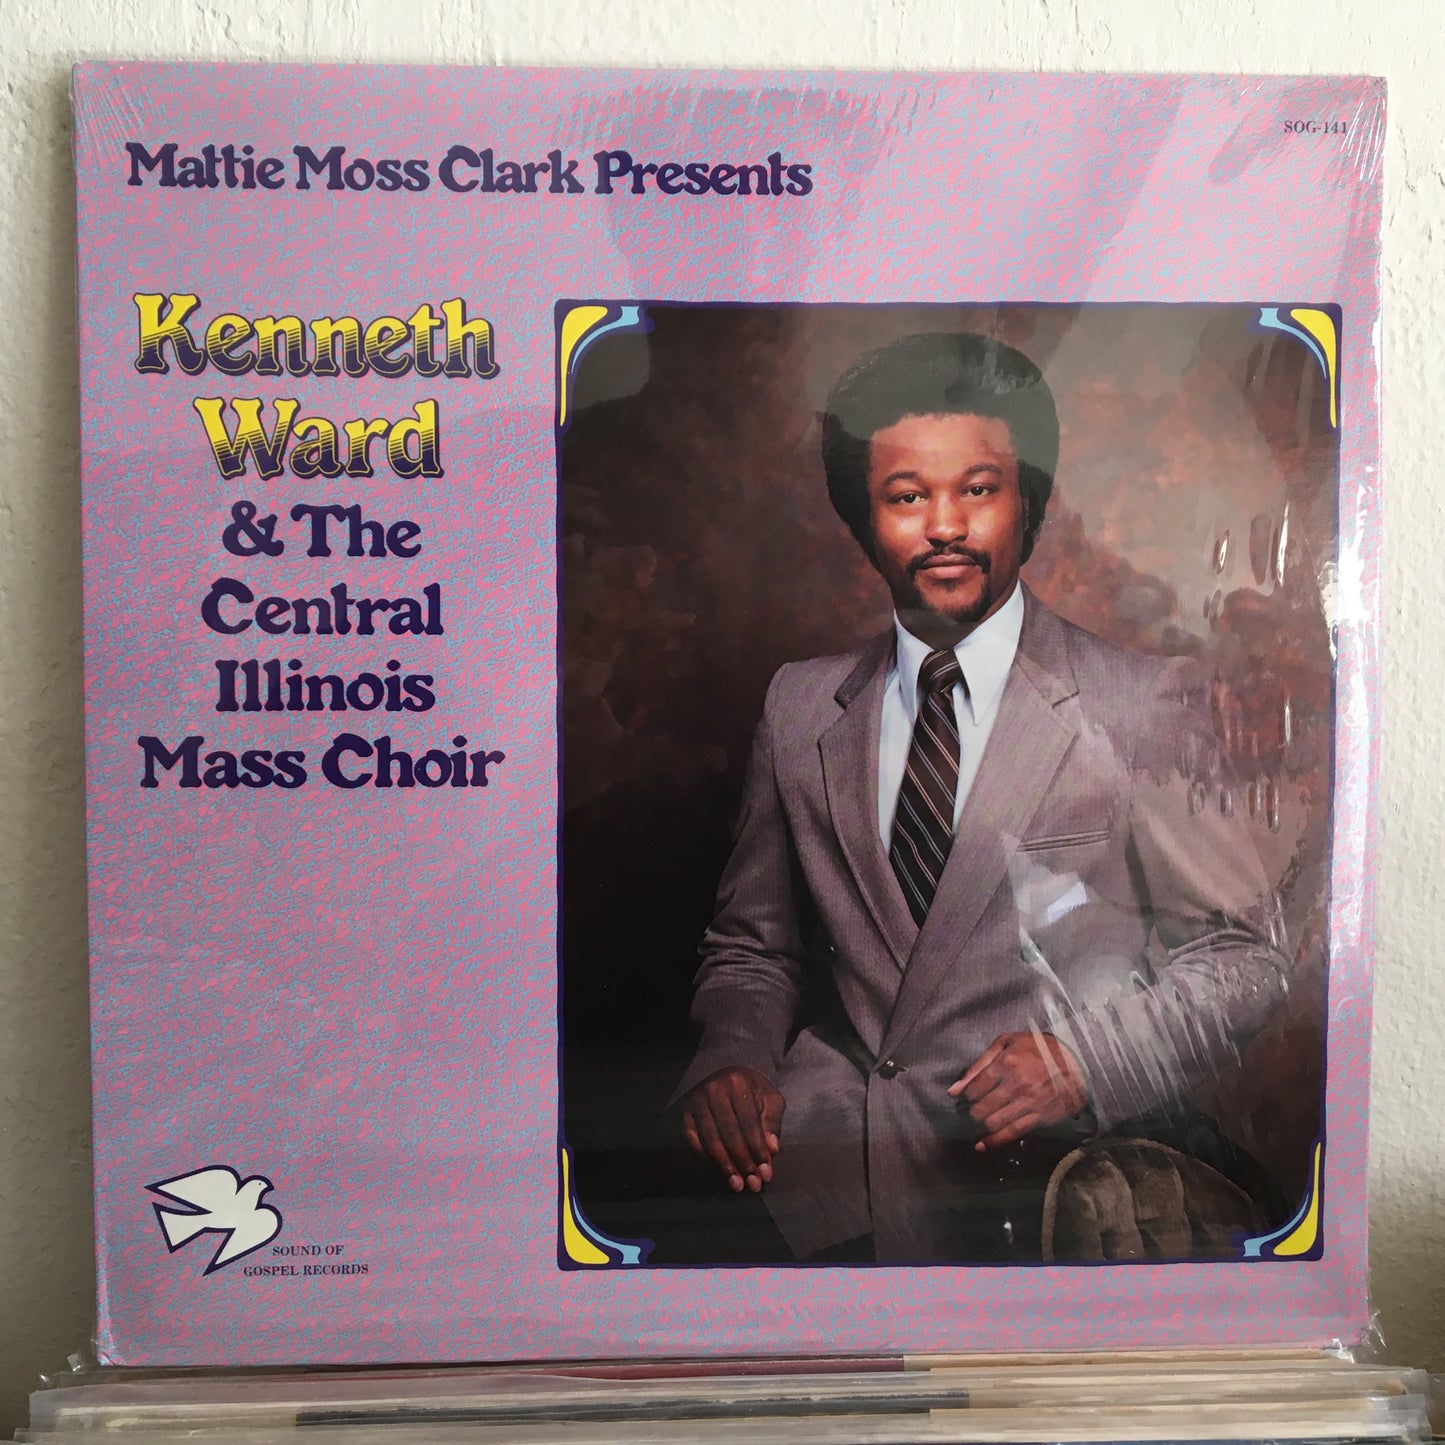 Mattie Moss Clark Presents Kenneth Ward & The Central Illinois Mass Choir